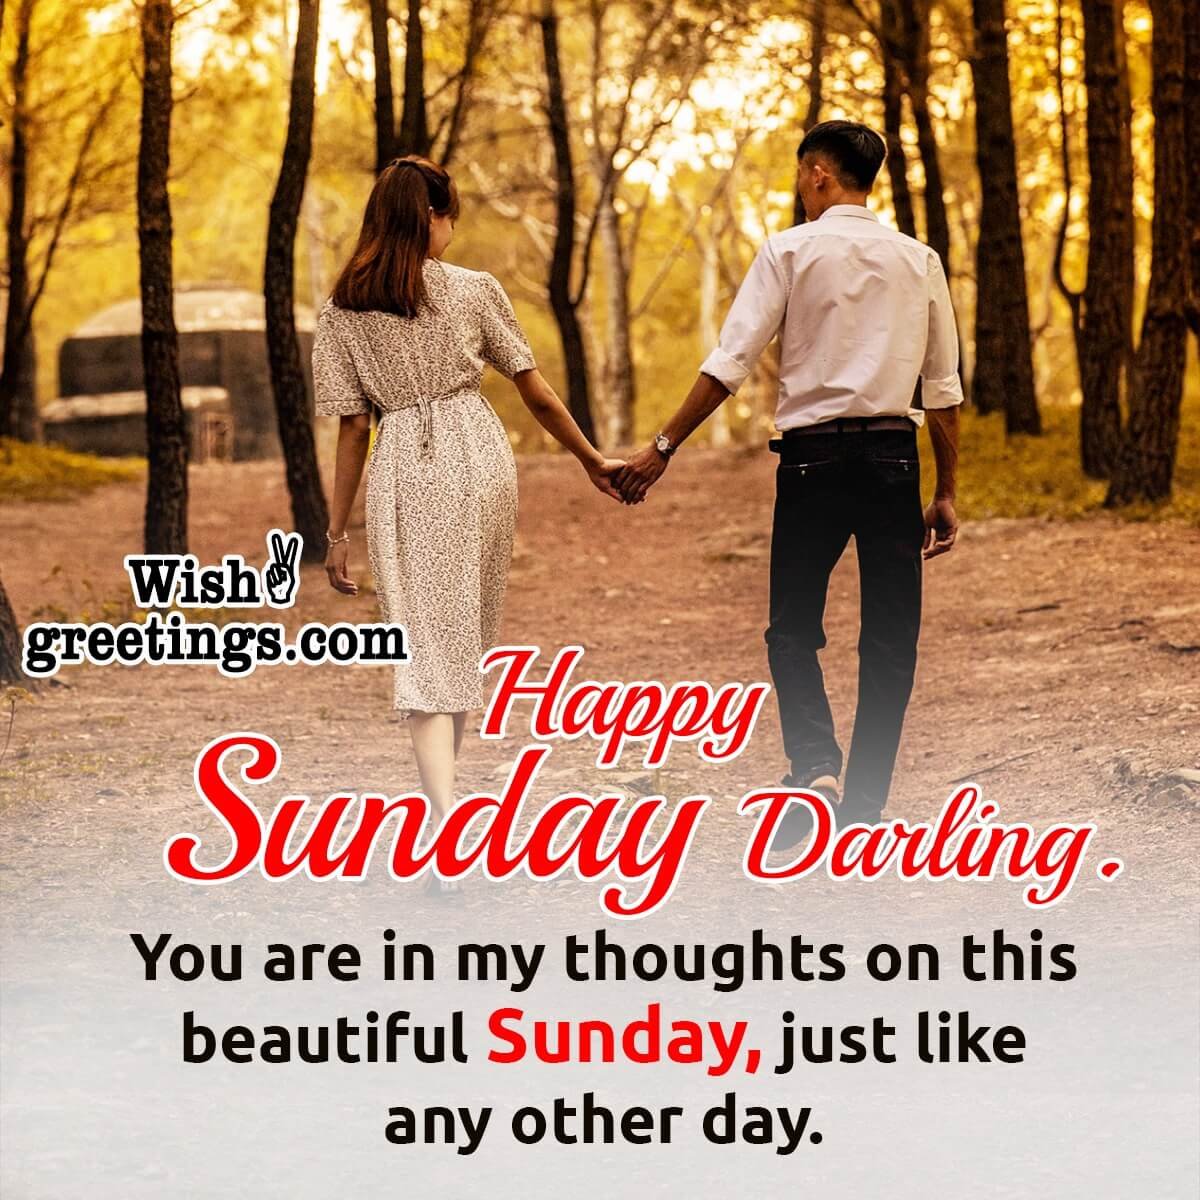 Happy Sunday Darling